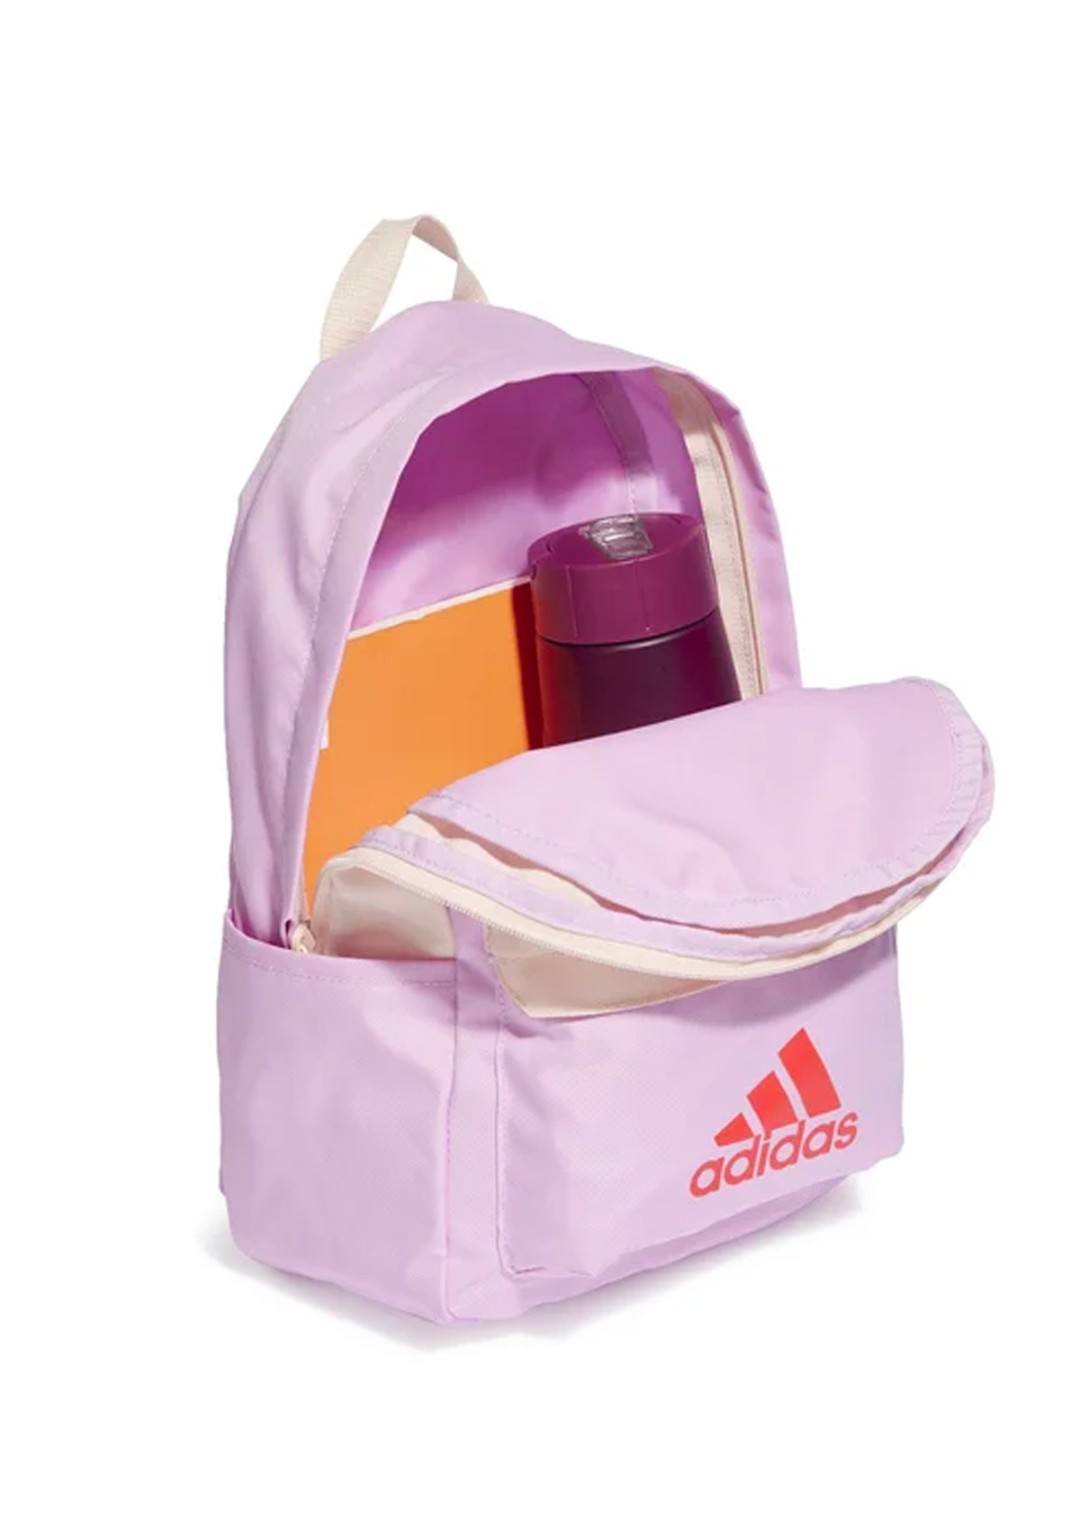 Adidas - Zaino logo - Bambine e ragazze - IL8450